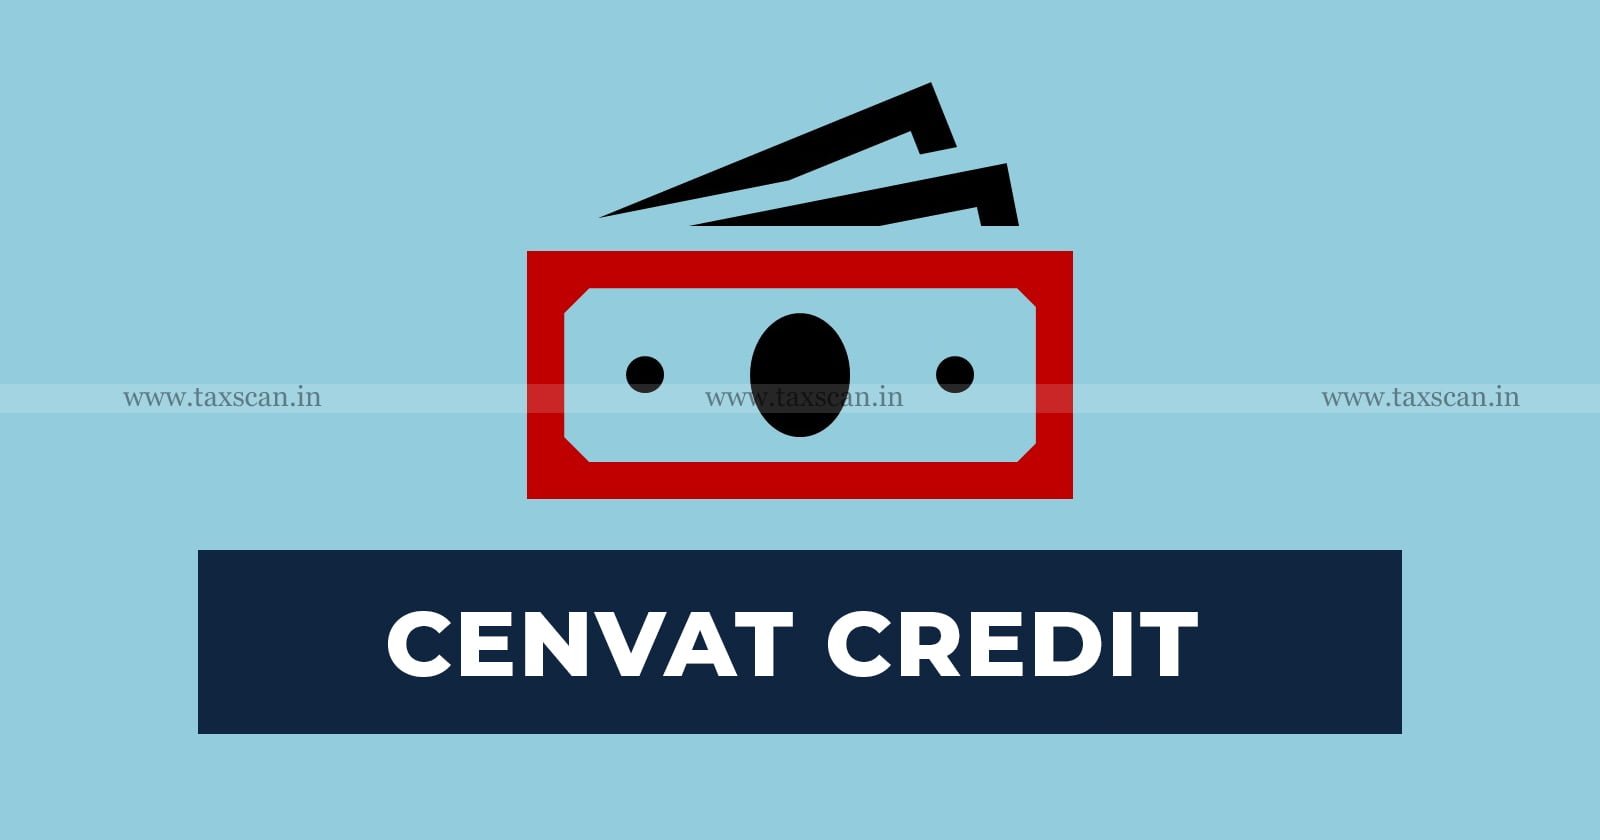 Payment - CVD - Cess - DEPB scrips - CESTAT - Cenvat Credit - taxscan